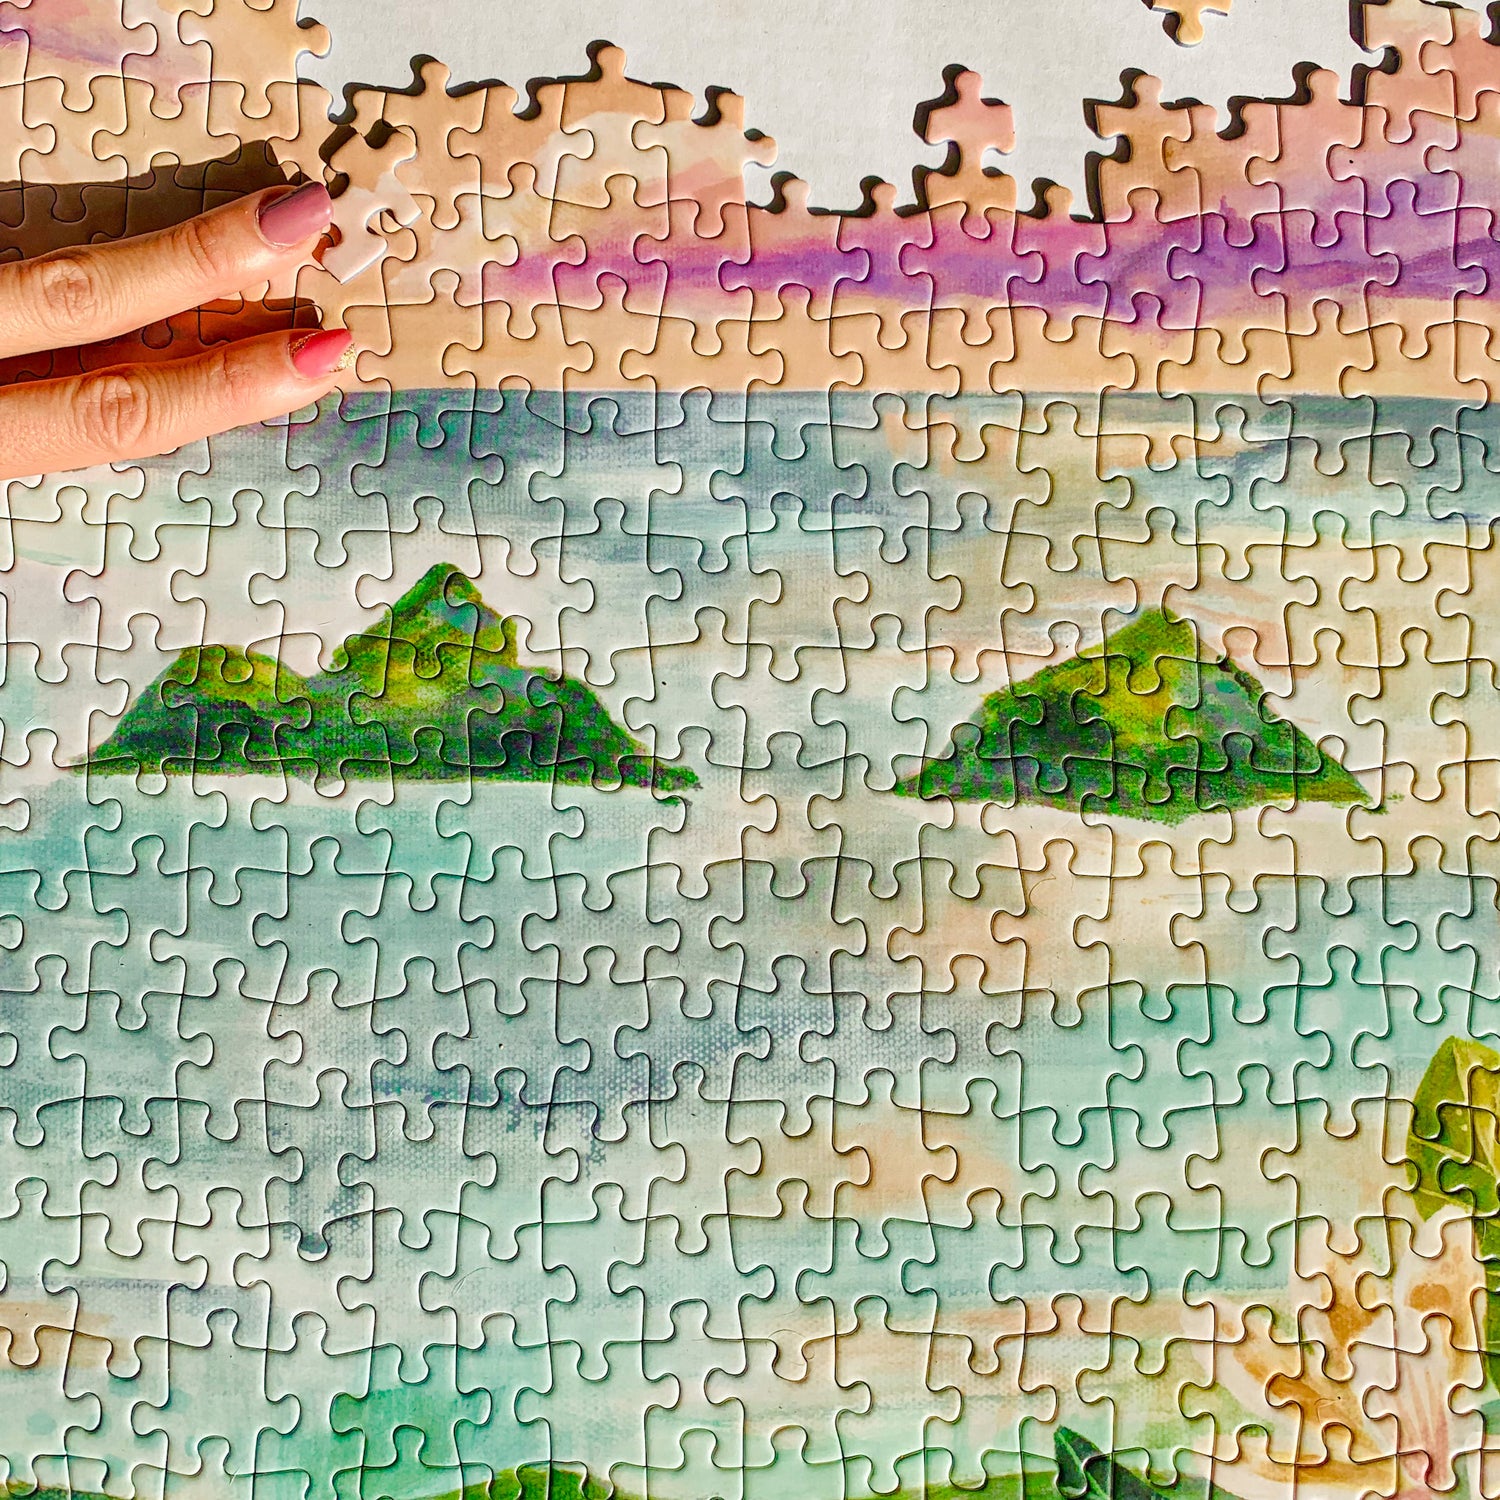 Mokulua islands puzzle